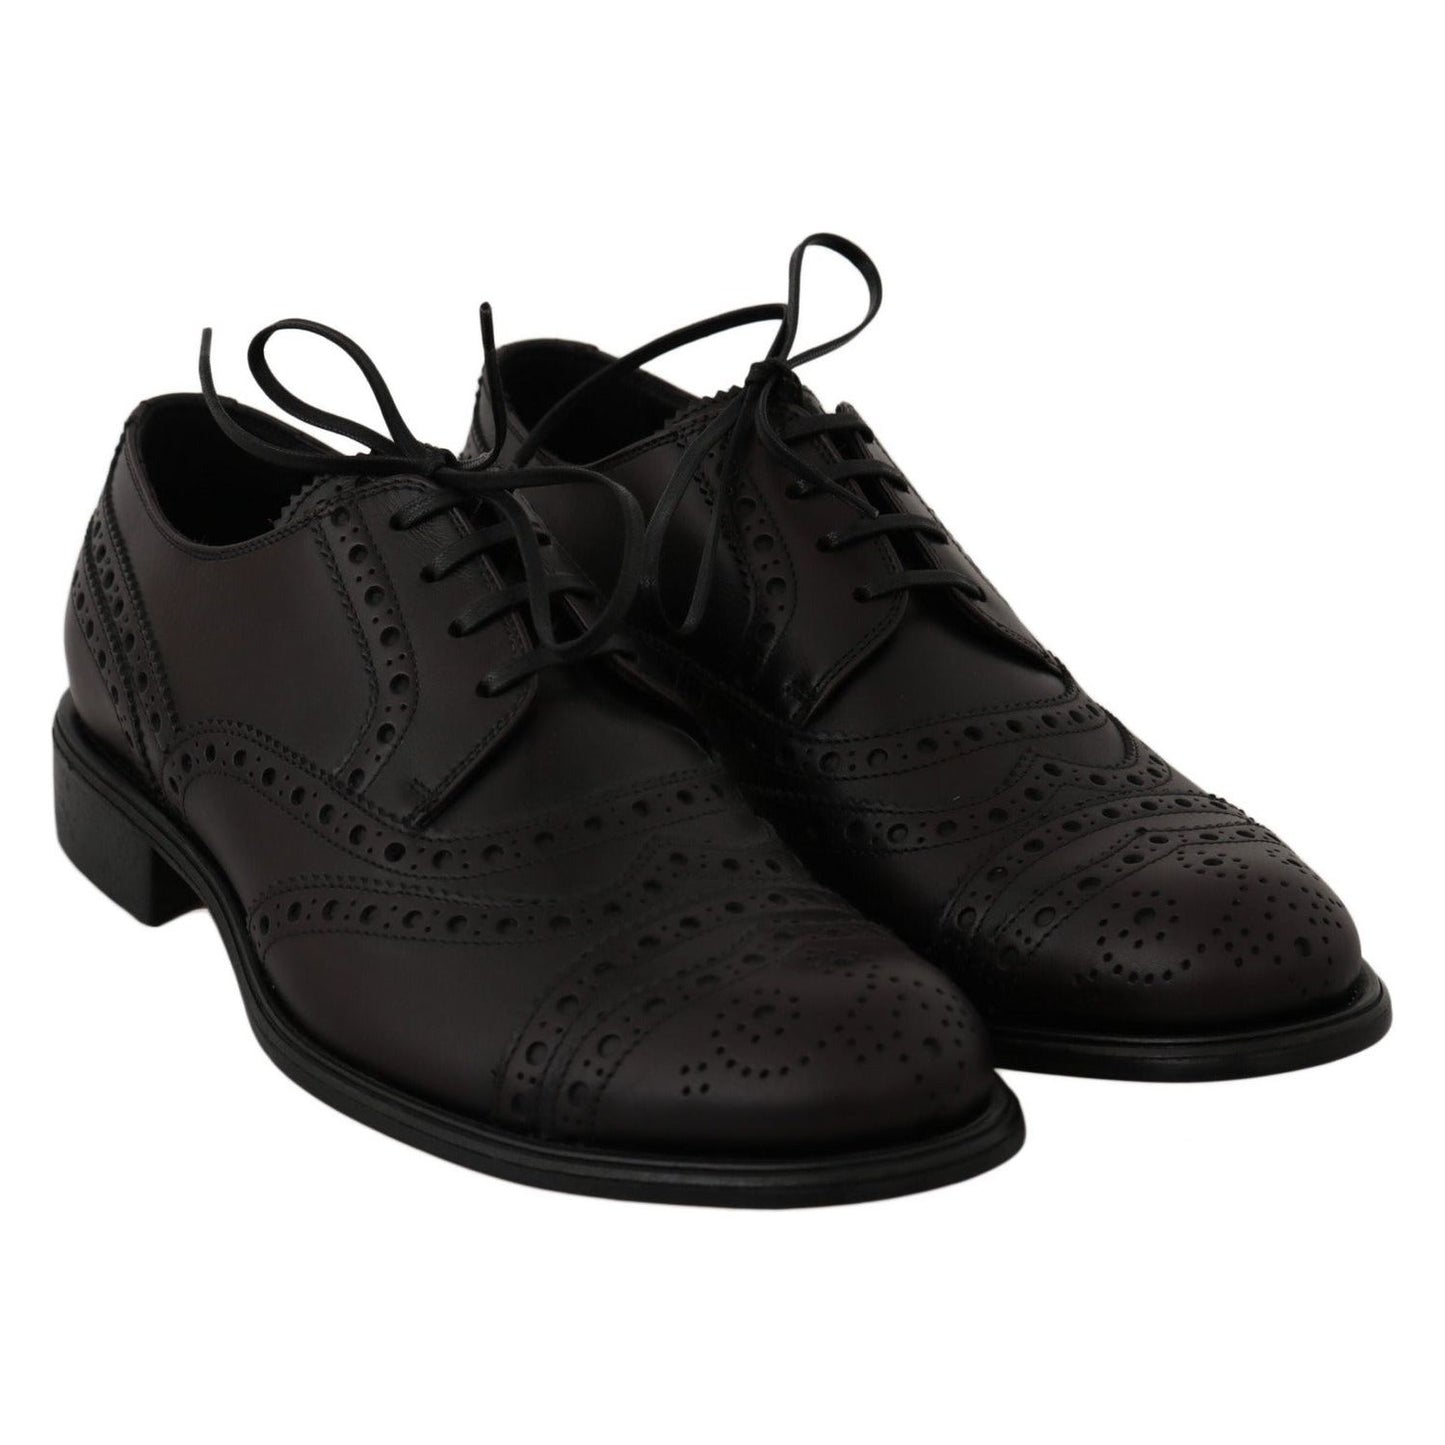 Dolce & Gabbana Elegant Bordeaux Wingtip Derby Dress Shoes Dress Shoes black-leather-wingtip-oxford-dress-shoes-1 IMG_8977-scaled.jpg